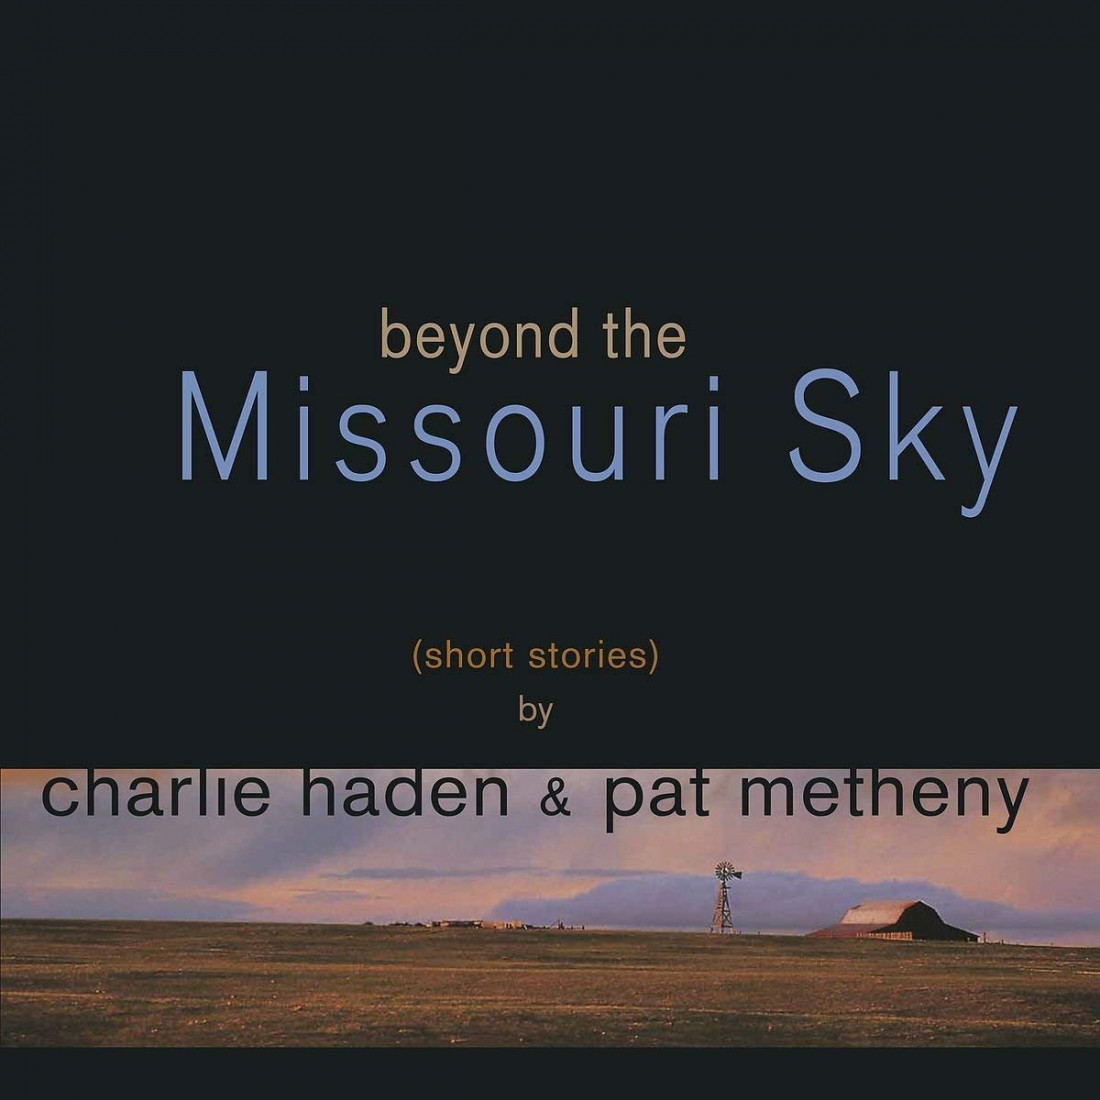 [Charlie Haden Pat Metheny] The Moon is a Harsh Mistress (Beyond The Missouri Sky) Photo-Image